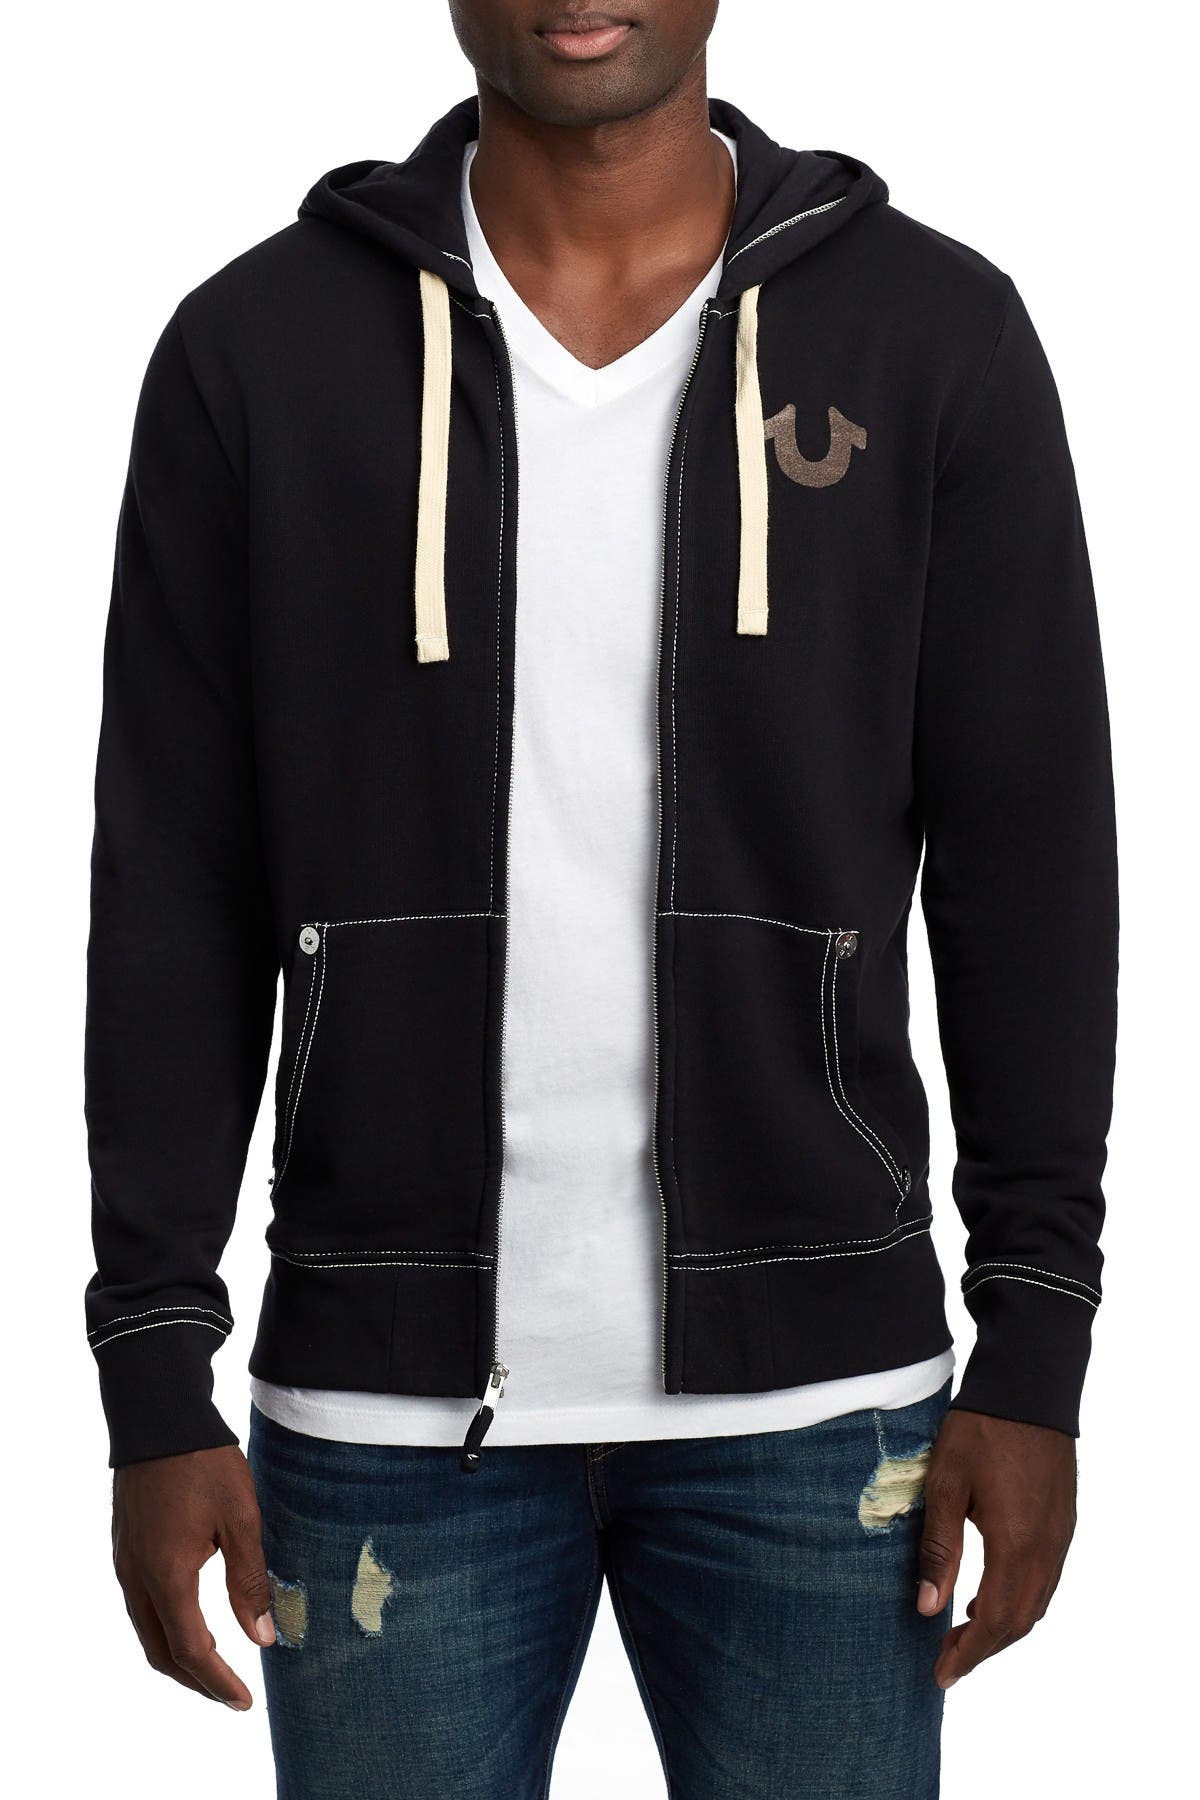 true religion hoodie canada